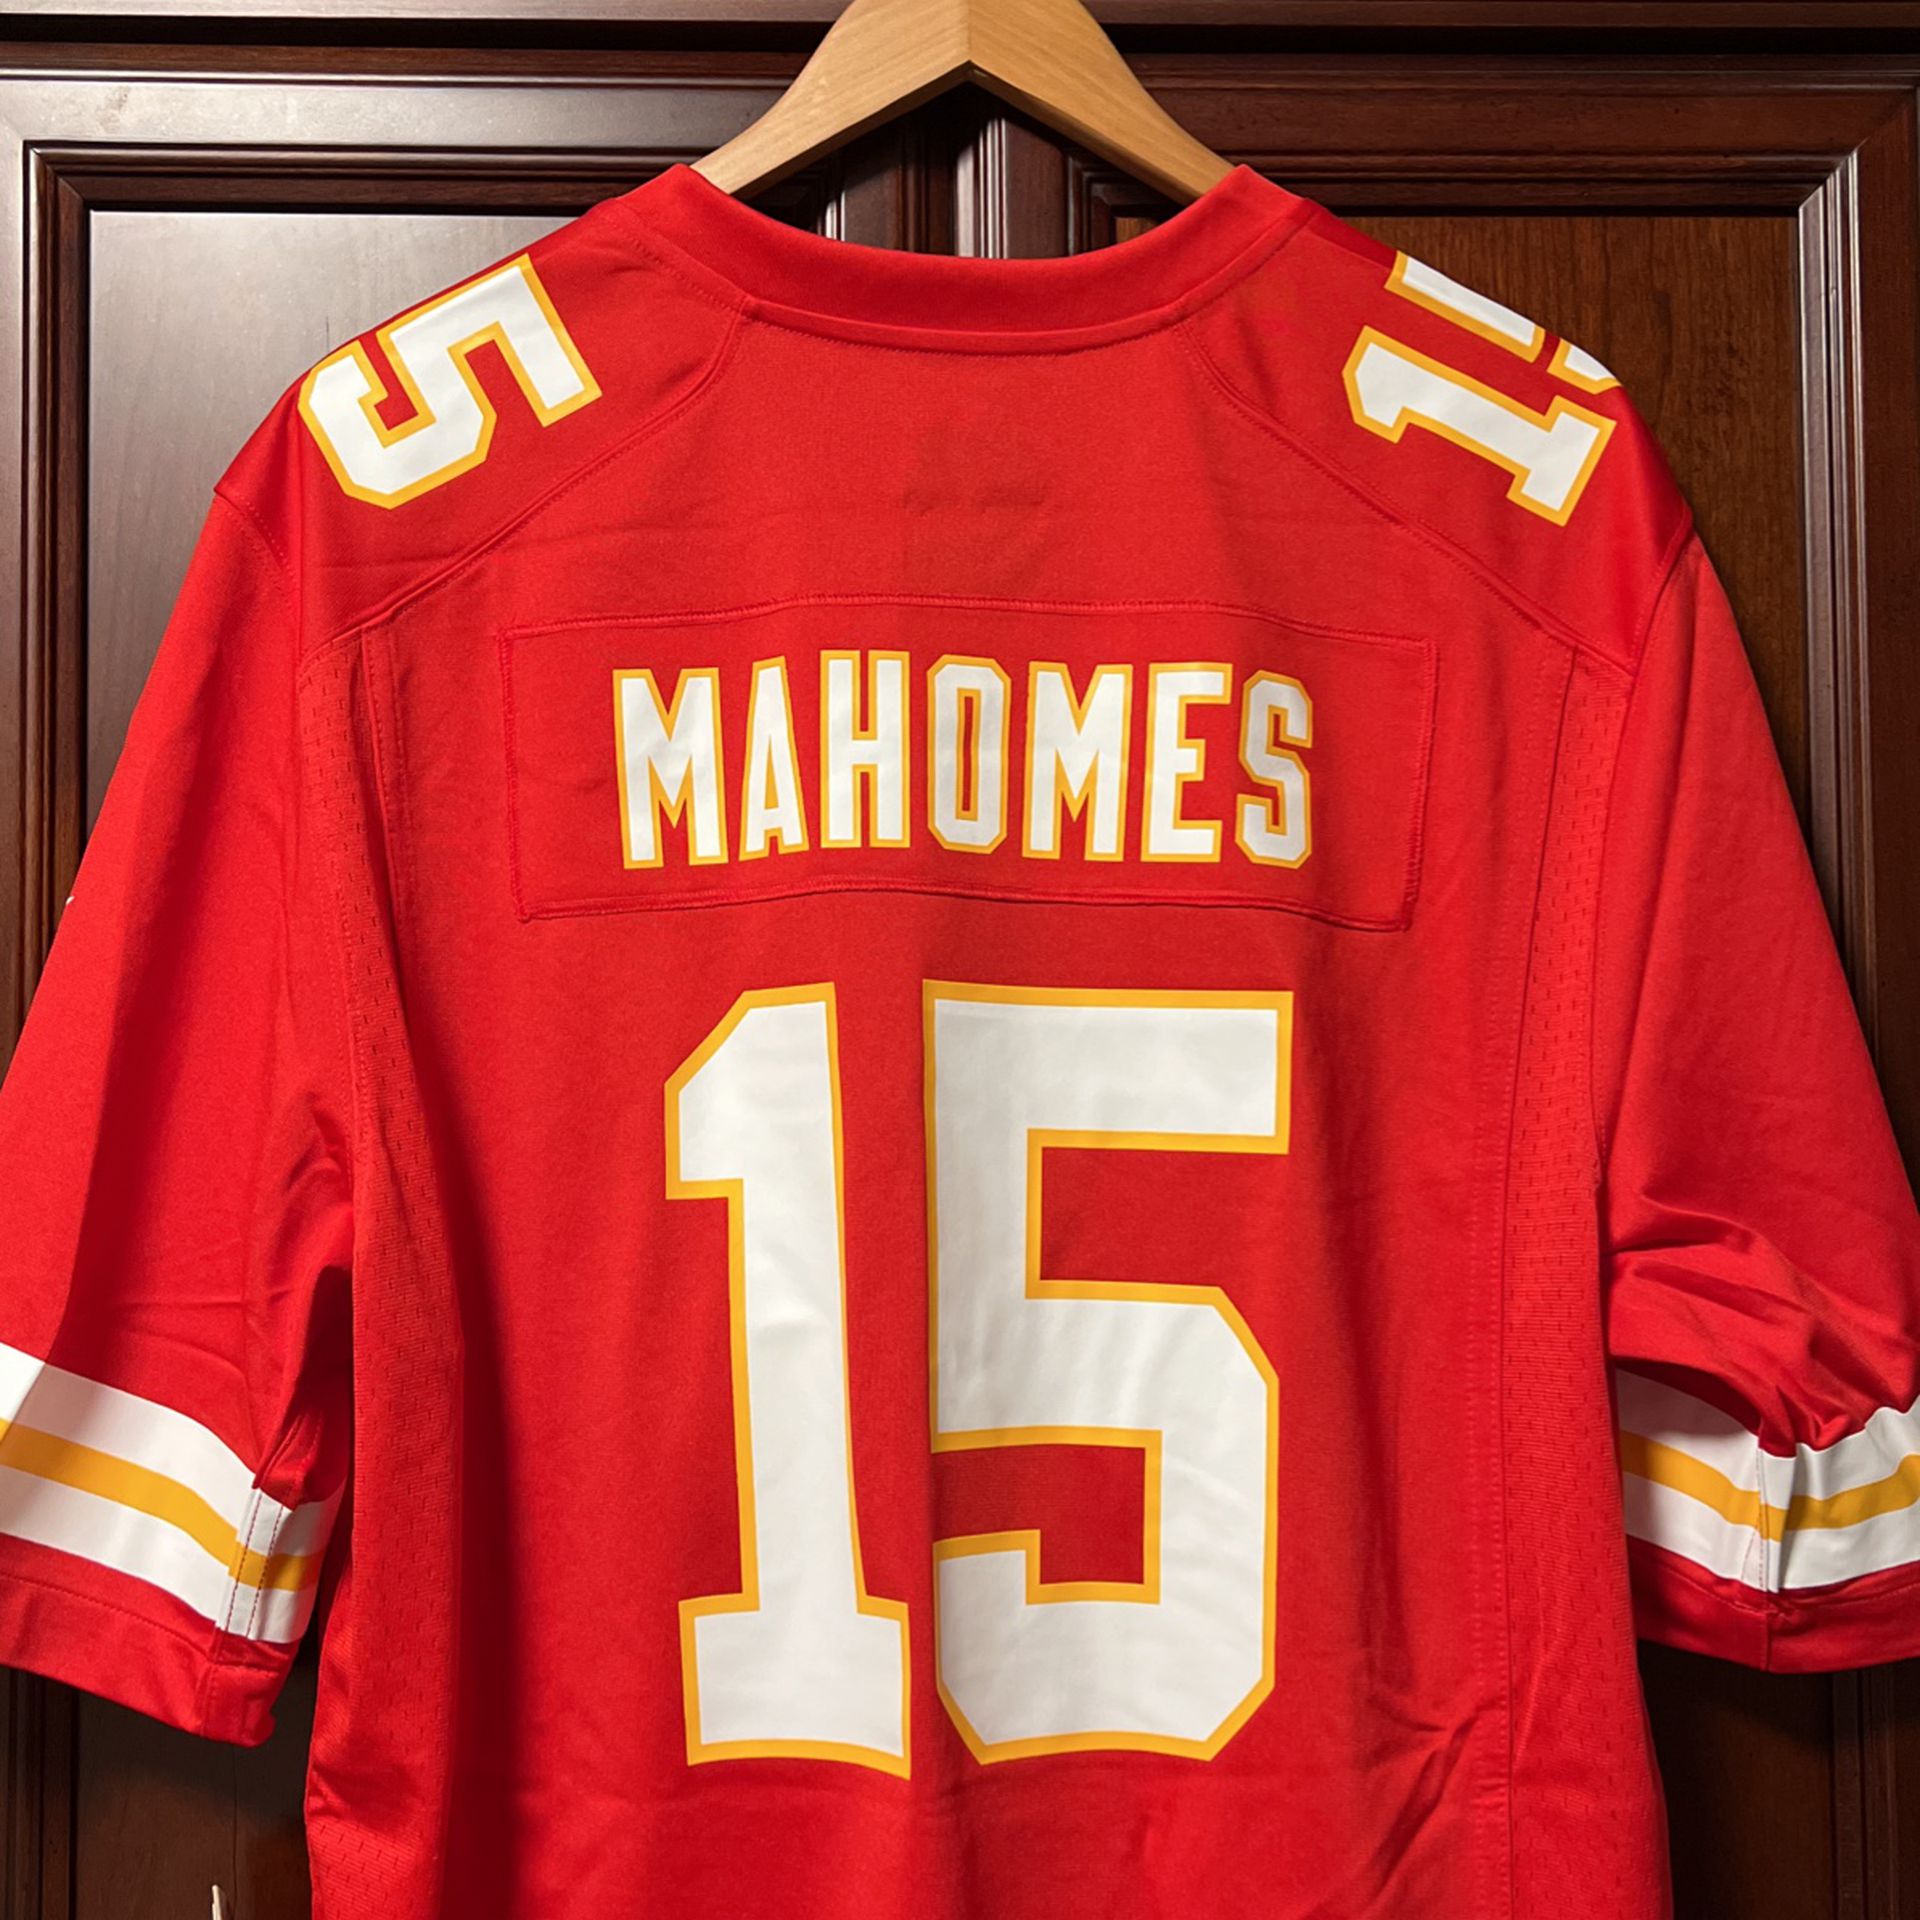 New Nike NFL KC Chiefs Patrick Mahomes 3X Super Bowl Winner & MVP #15 Jersey